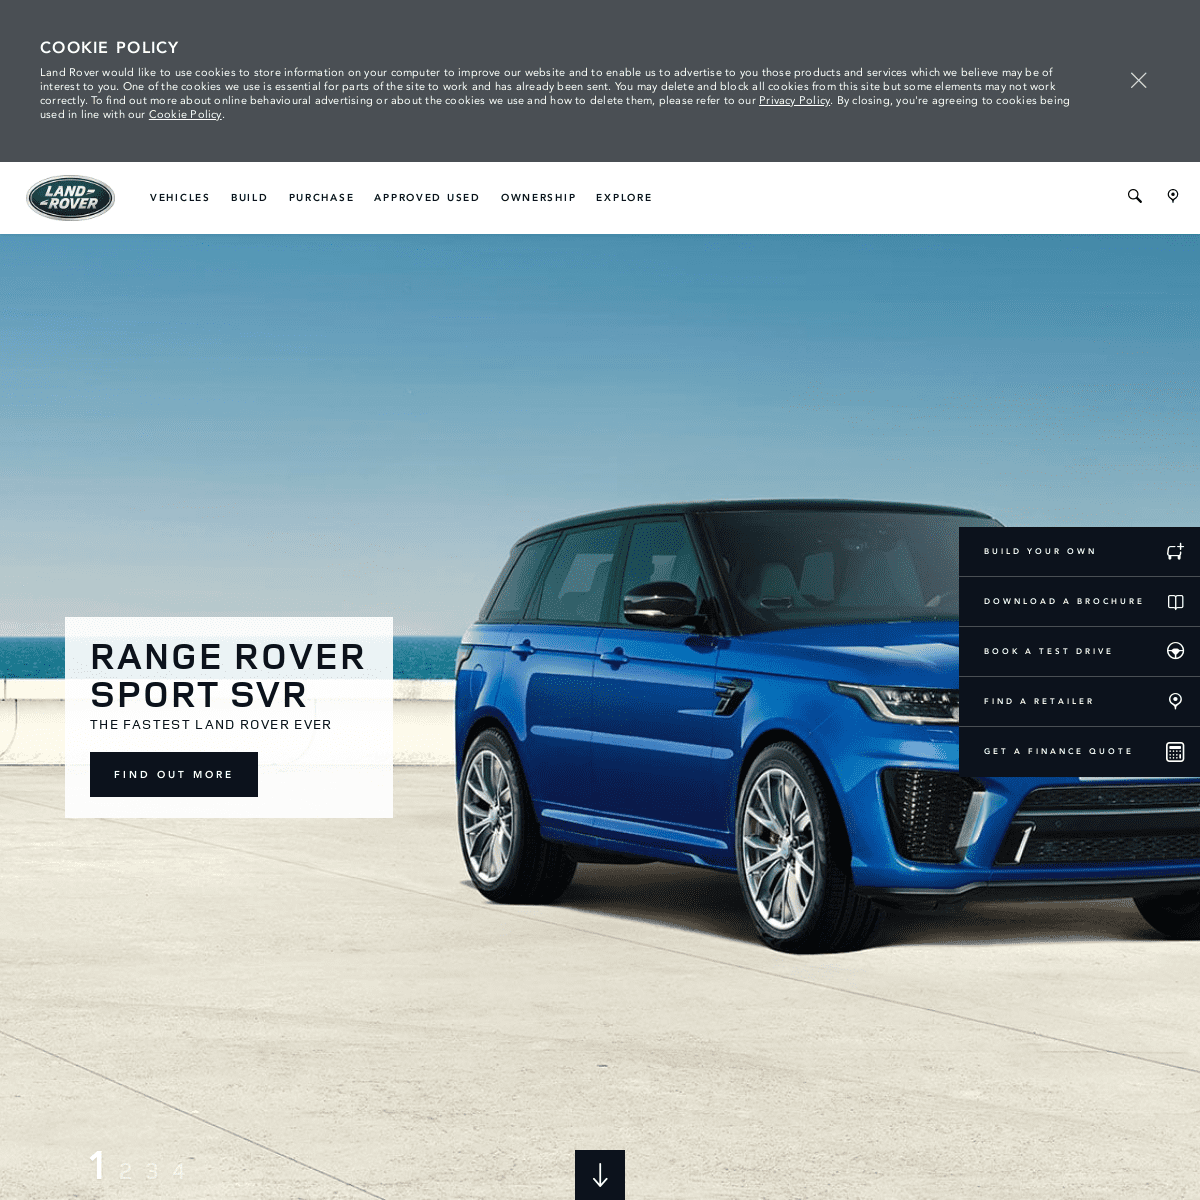 Premium 4x4 Vehicles & Luxury SUVs - Land Rover UK